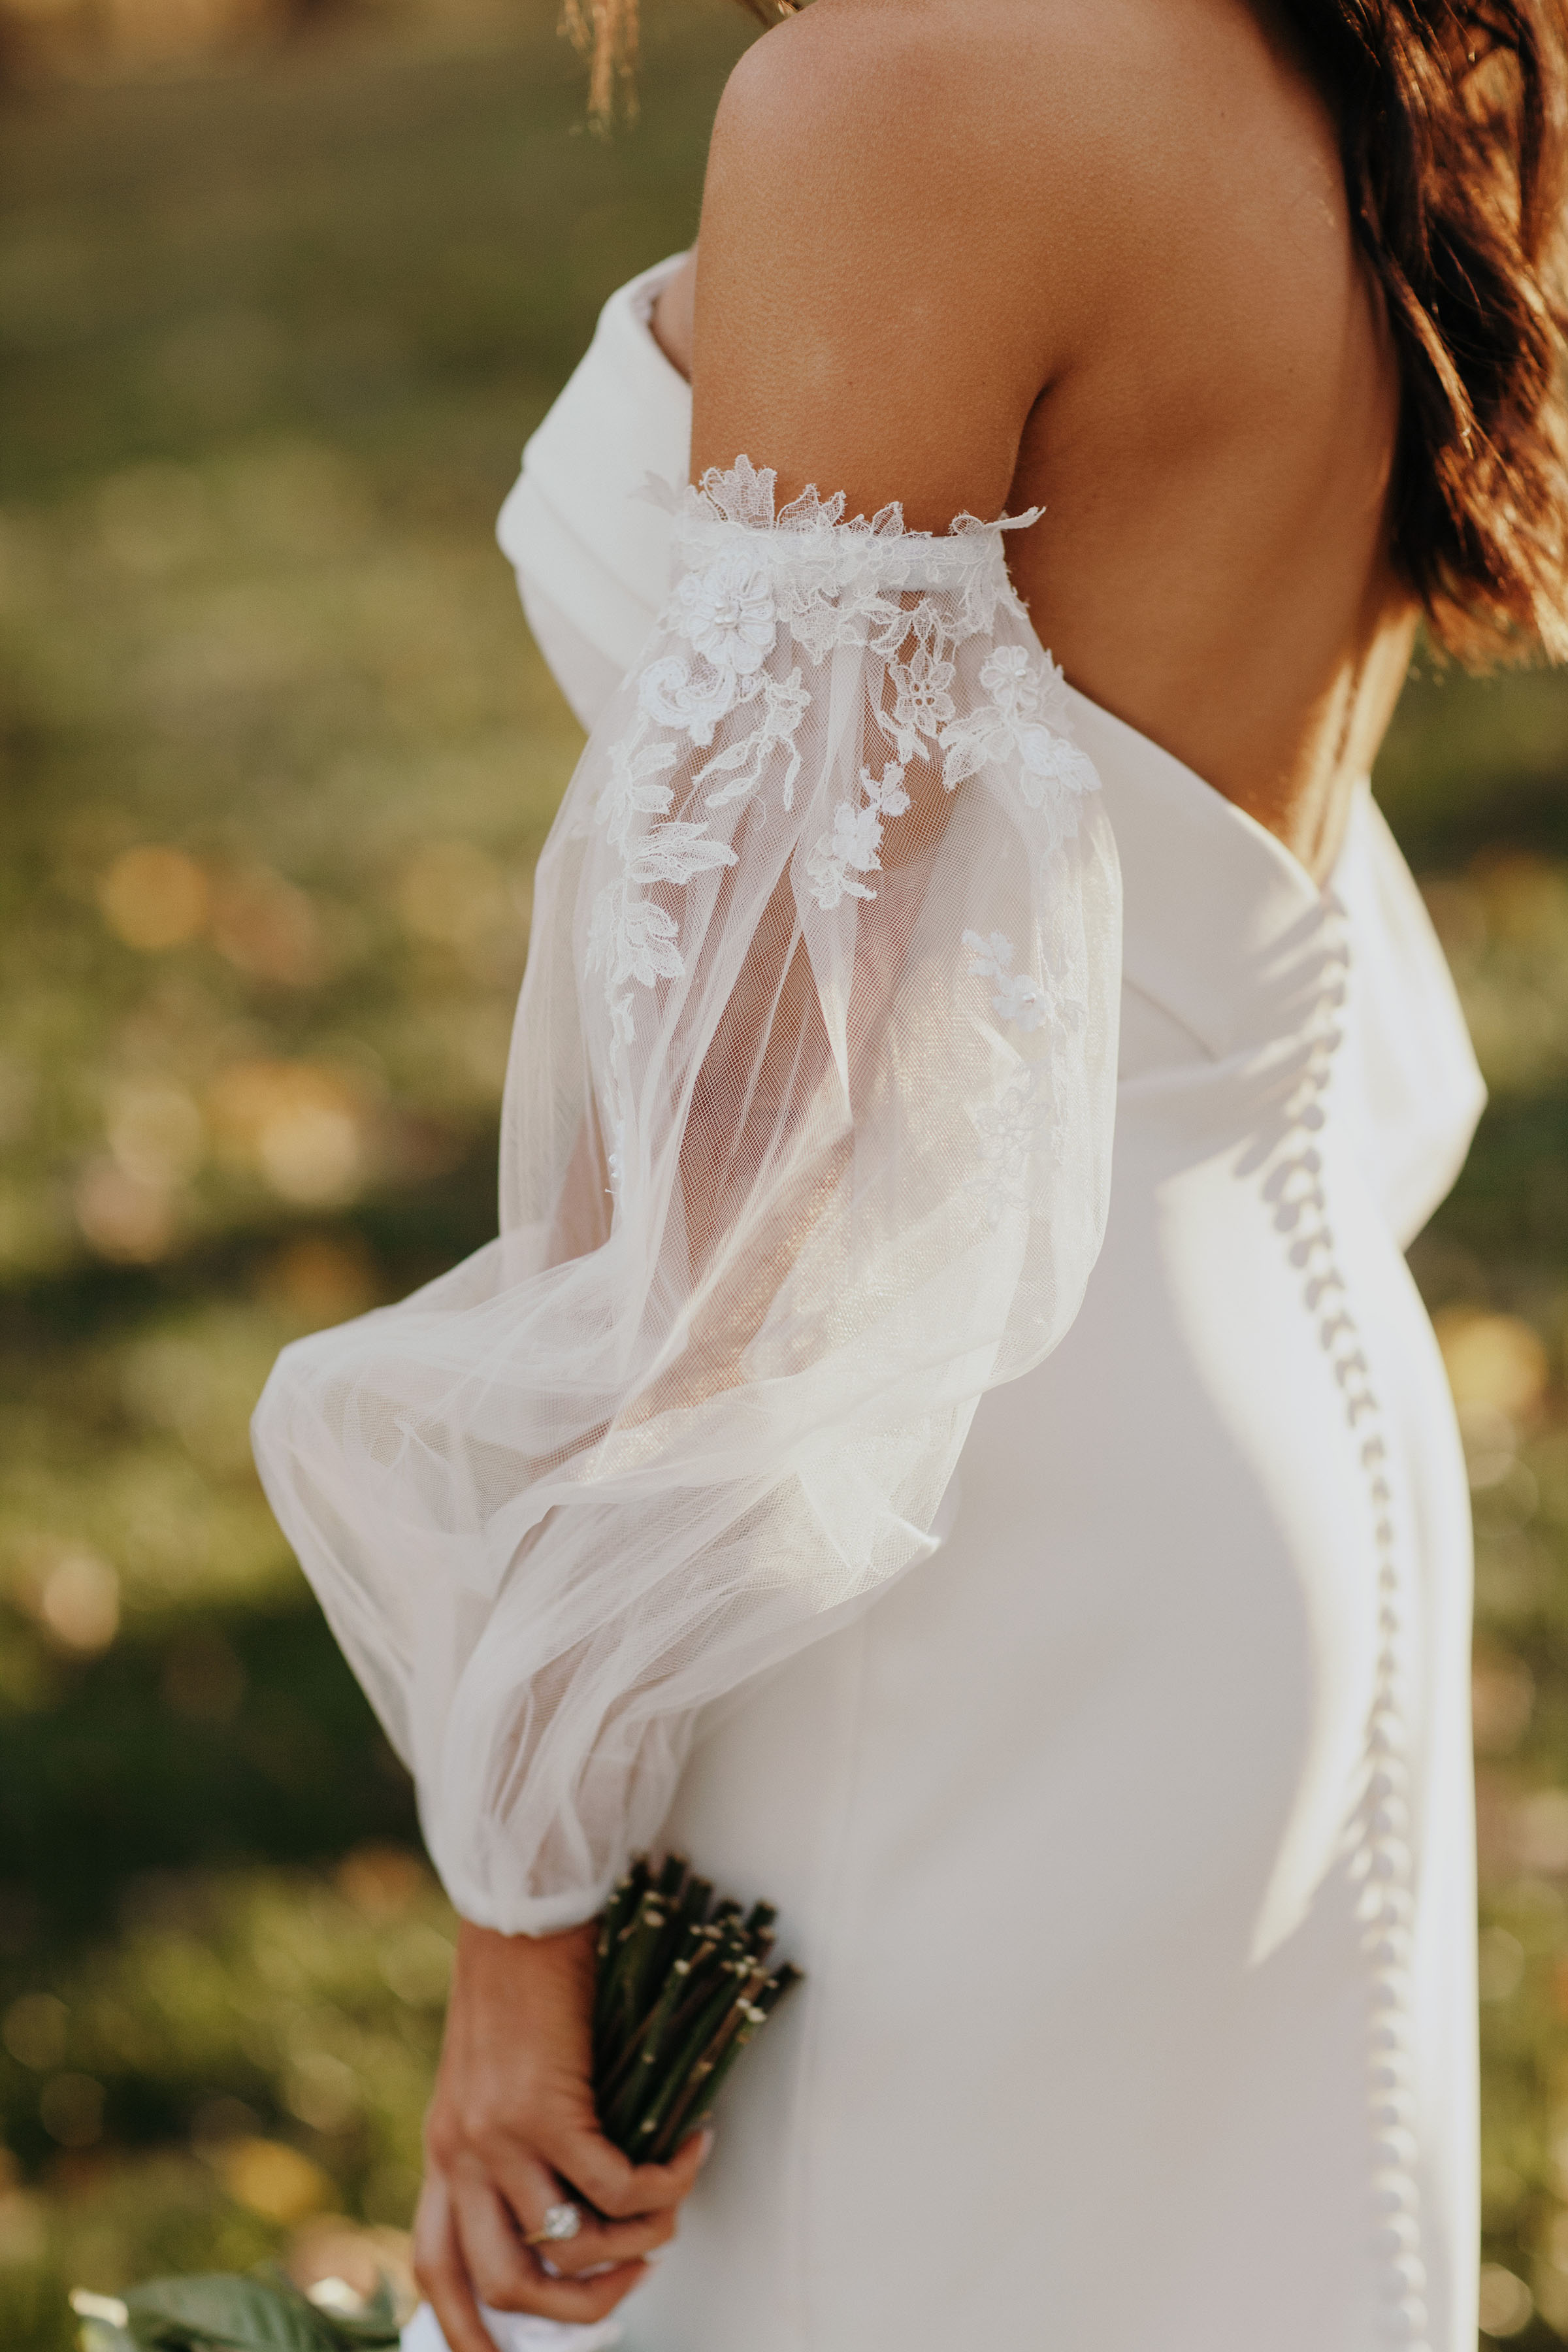 Jessica Clarke Wedding Dress by Anne Barge